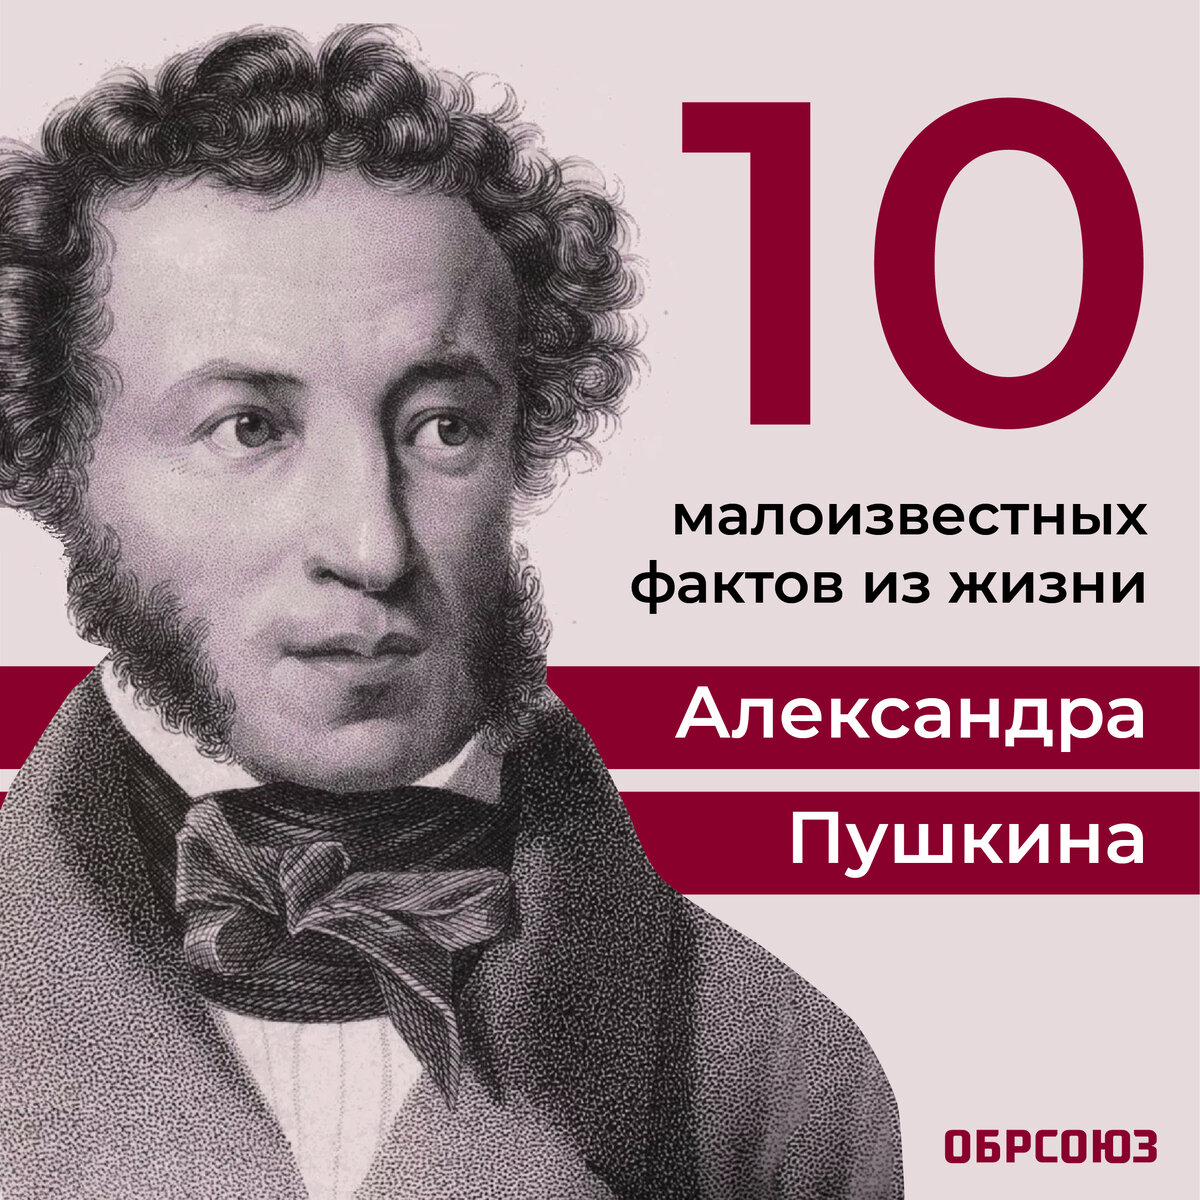 Интересные факты из биографии Александра Пушкина